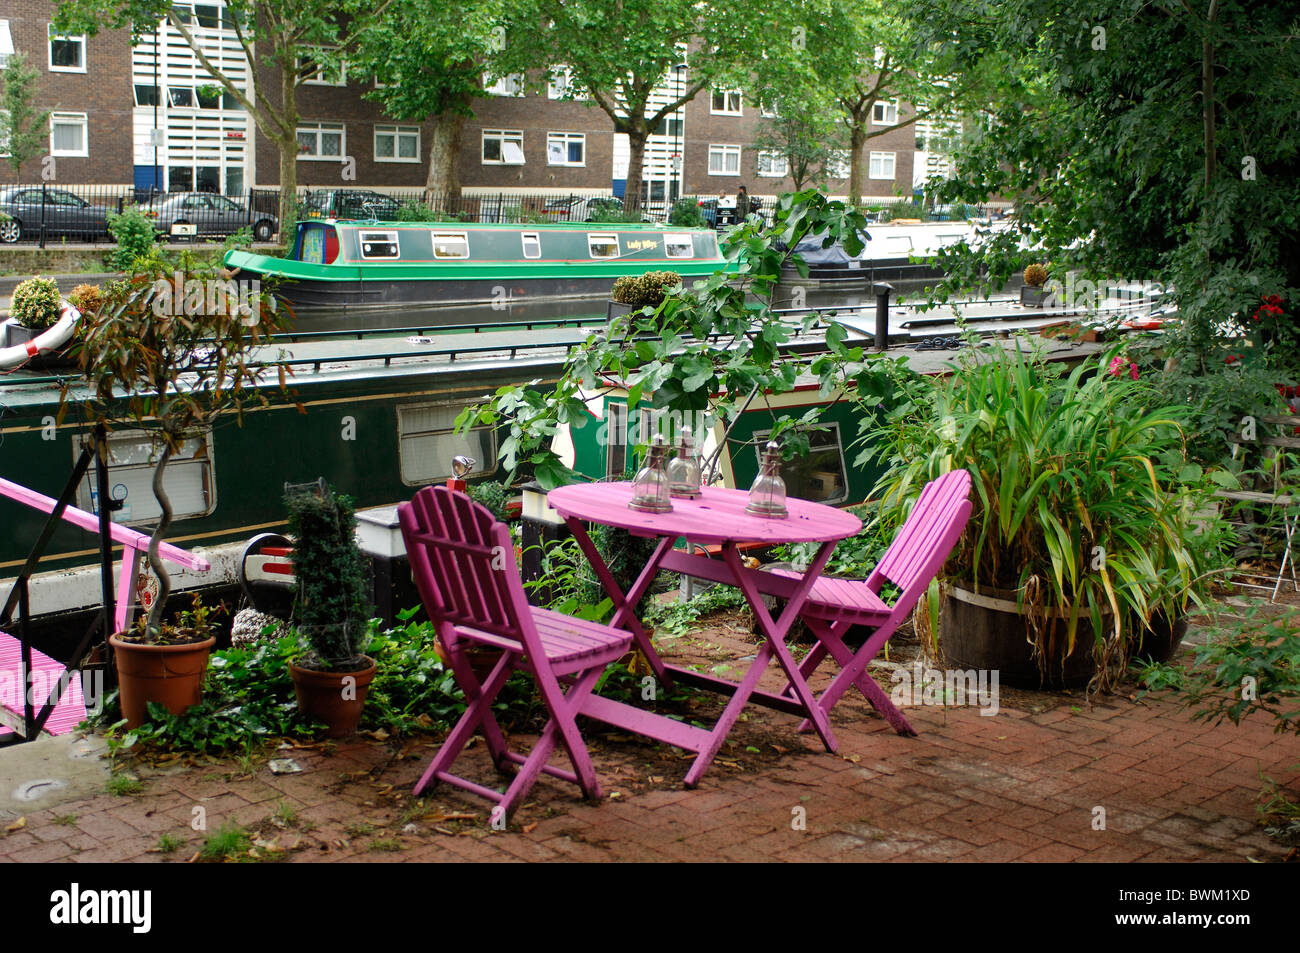 UK London Grand Union Canal Little Venice Großbritannien Europa England Stühle Tisch Boote Terrasse grünen na Stockfoto